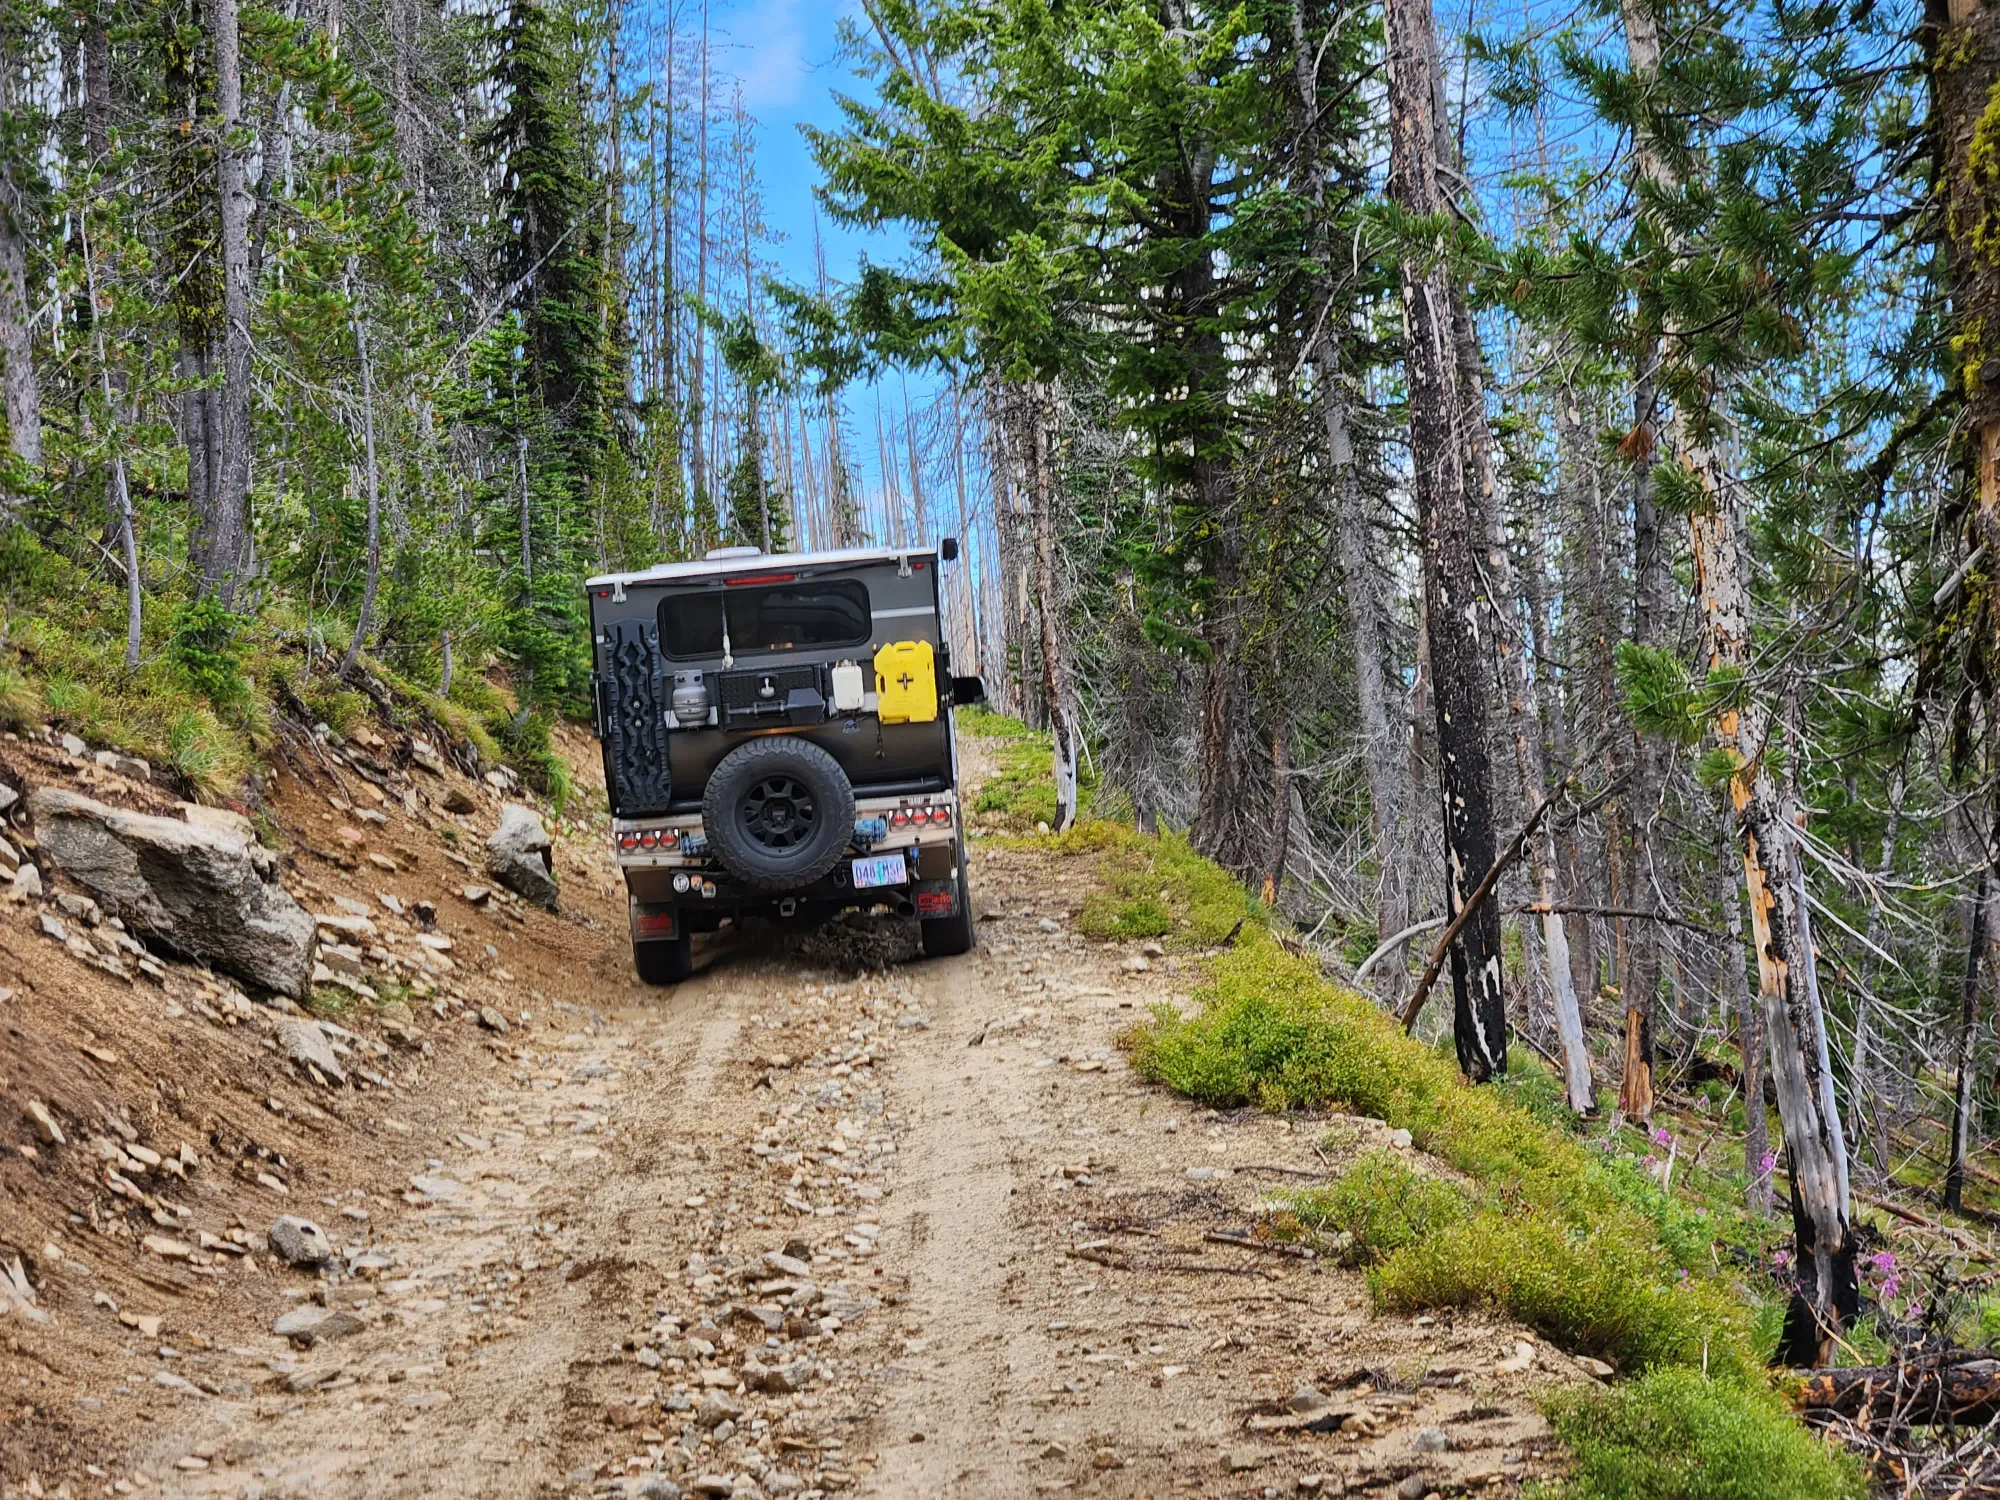 Camping, Exploring, and Traversing the Magruder Trail